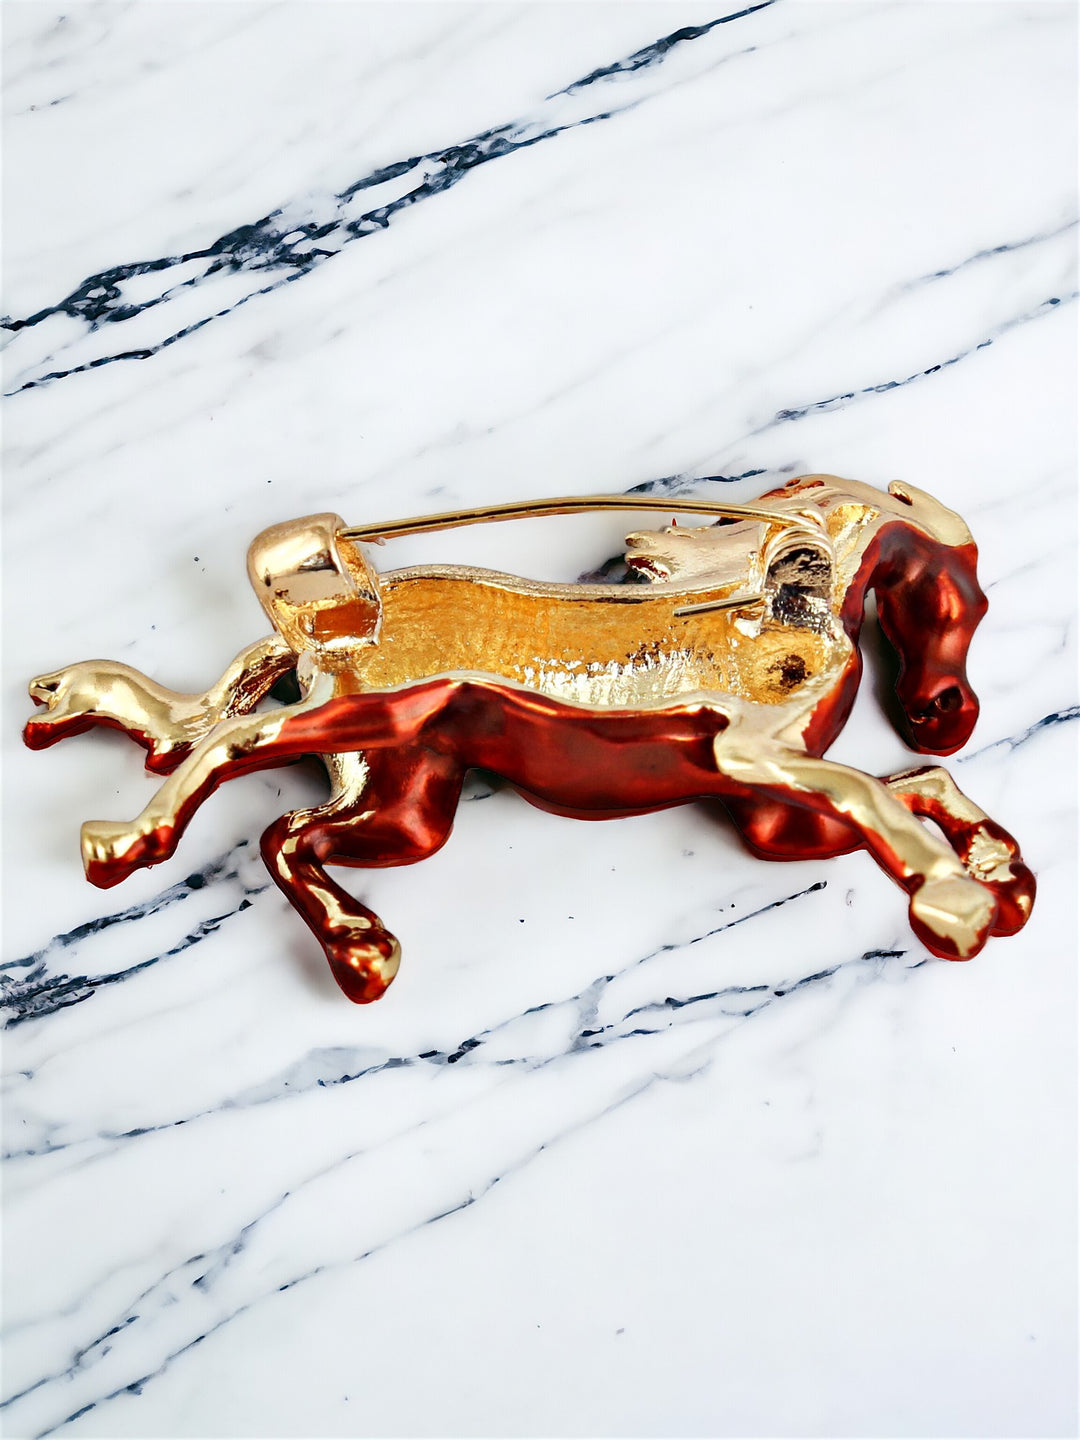 LUCKY JEWELLERY Designer Gold Plating Copper Color Meenakari Vintage Running Horse Unisex Brooch Pin For Women/Girls/Men (150-CHOM1-1182-C)